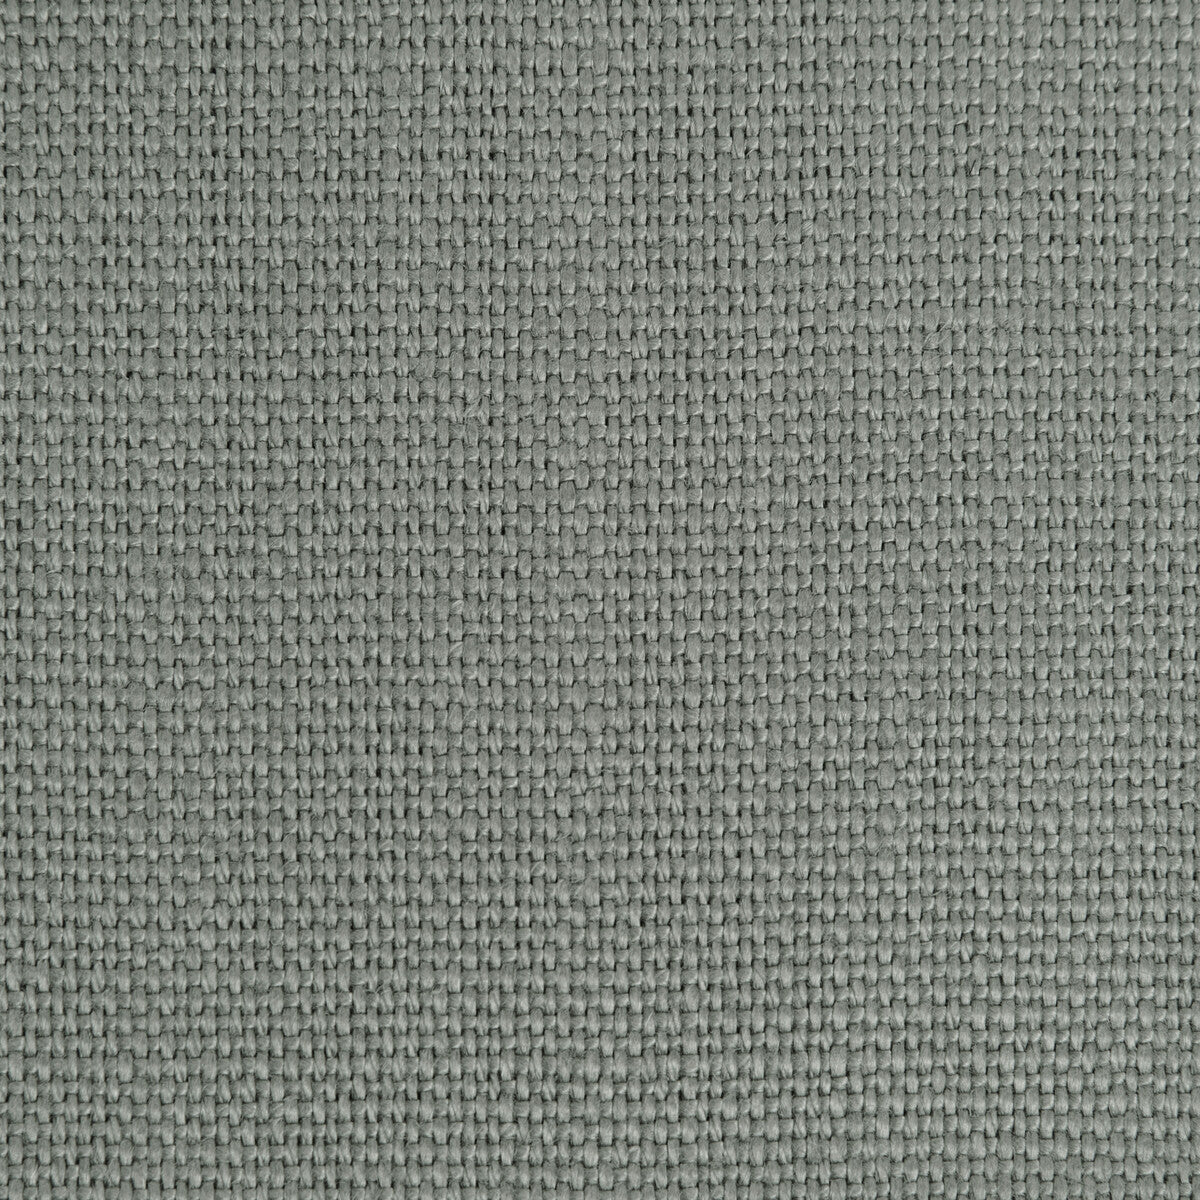 Stone Harbor fabric in steel color - pattern 27591.52.0 - by Kravet Basics